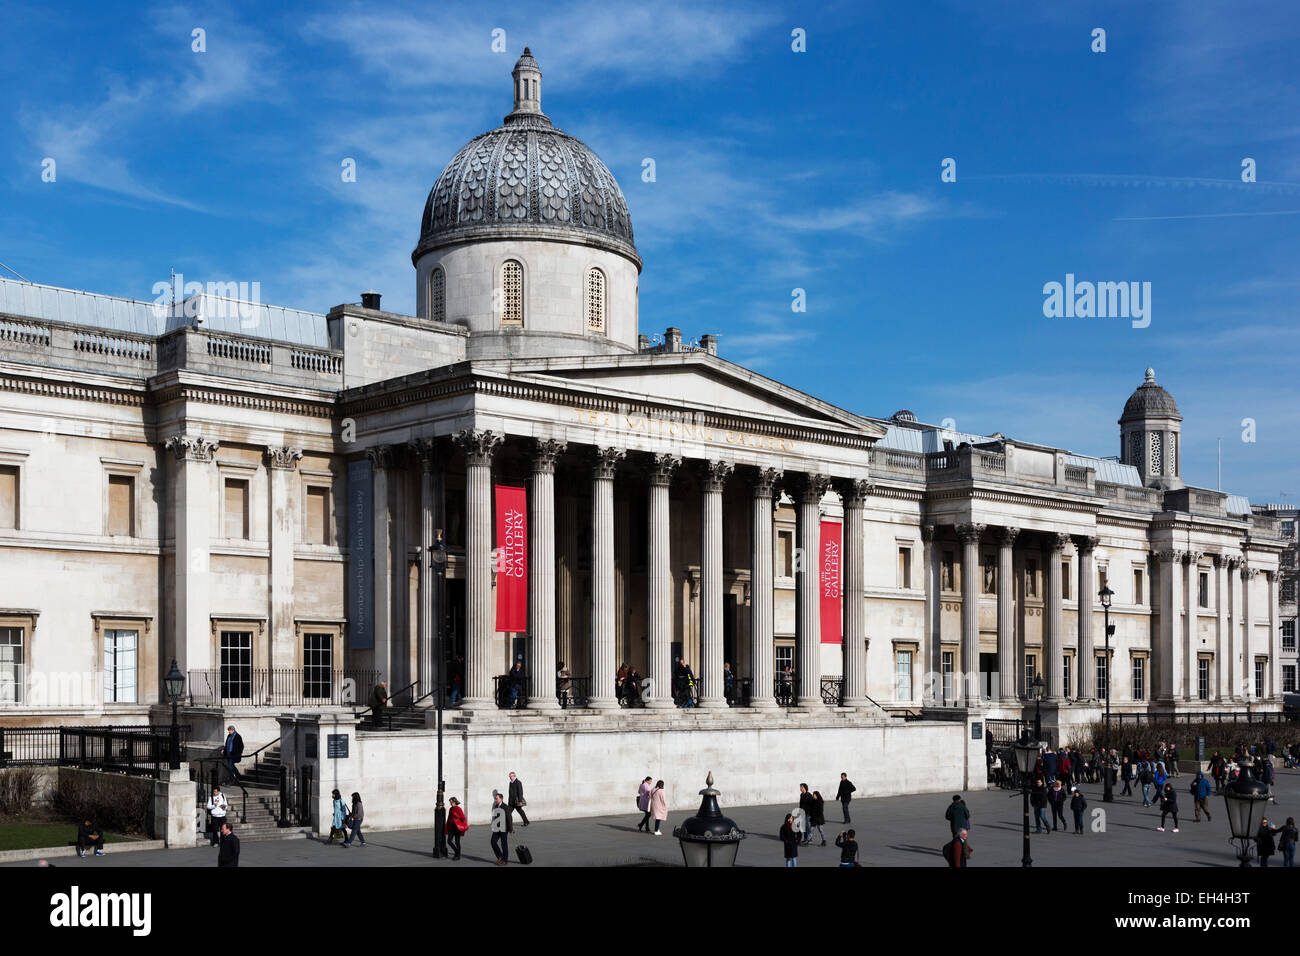 The National Gallery in Trafalgar Square, London, England, United Kingdom Stock Photo